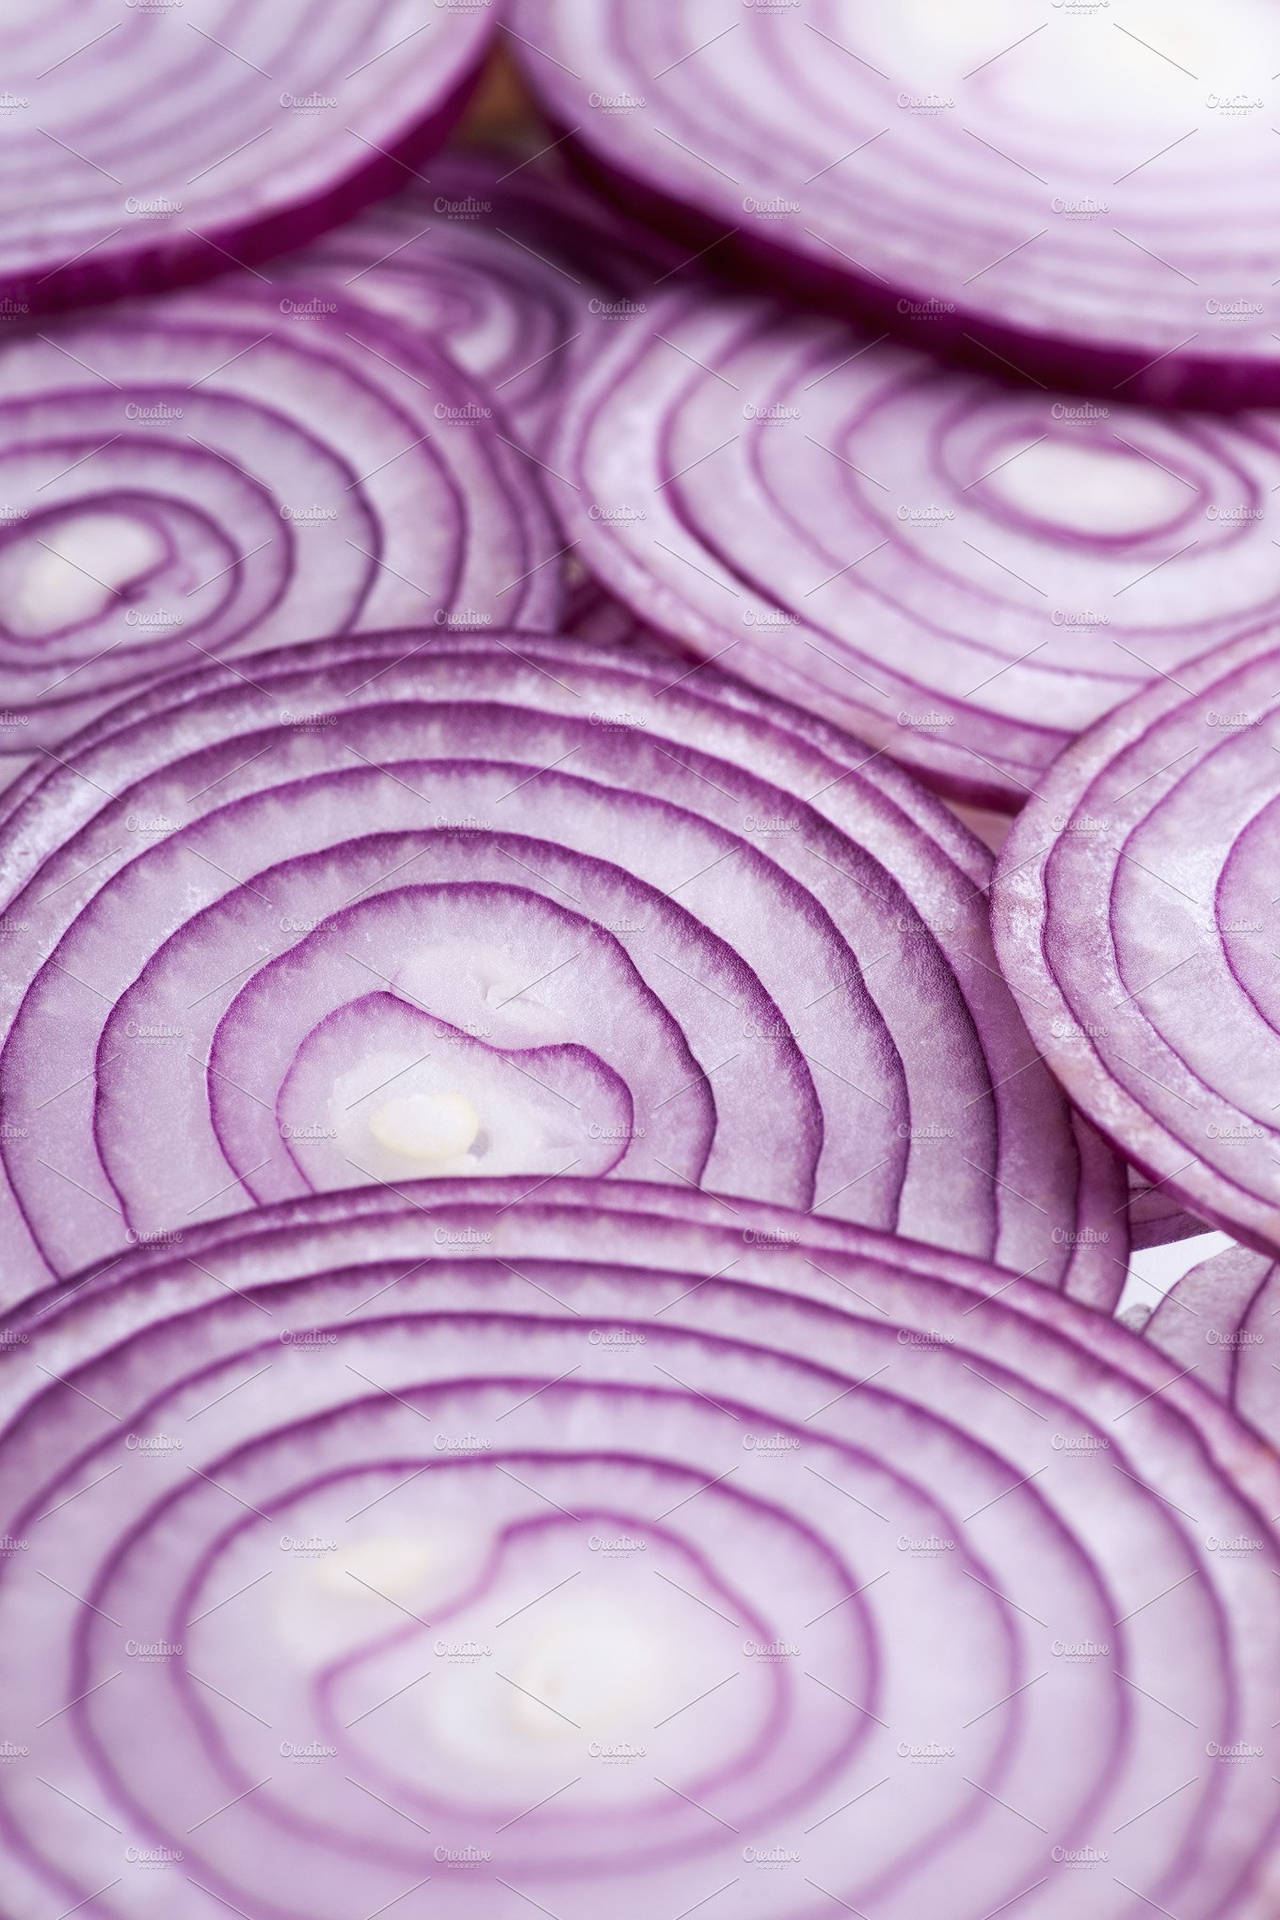 Thin Cut Slices Red Onion Vegetables Portrait Wallpaper